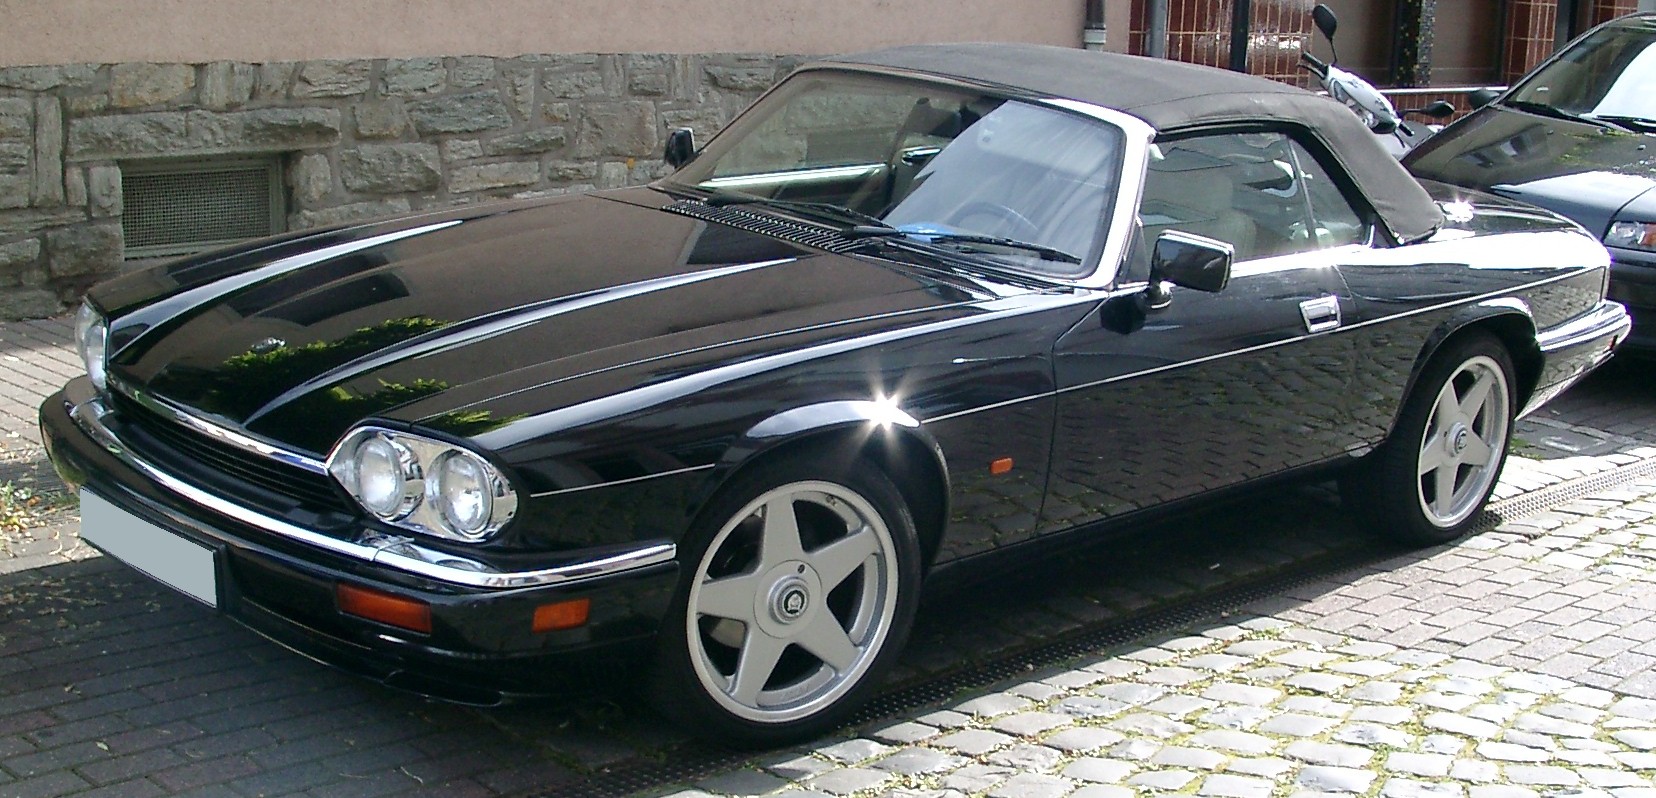 Jaguar XJ-S